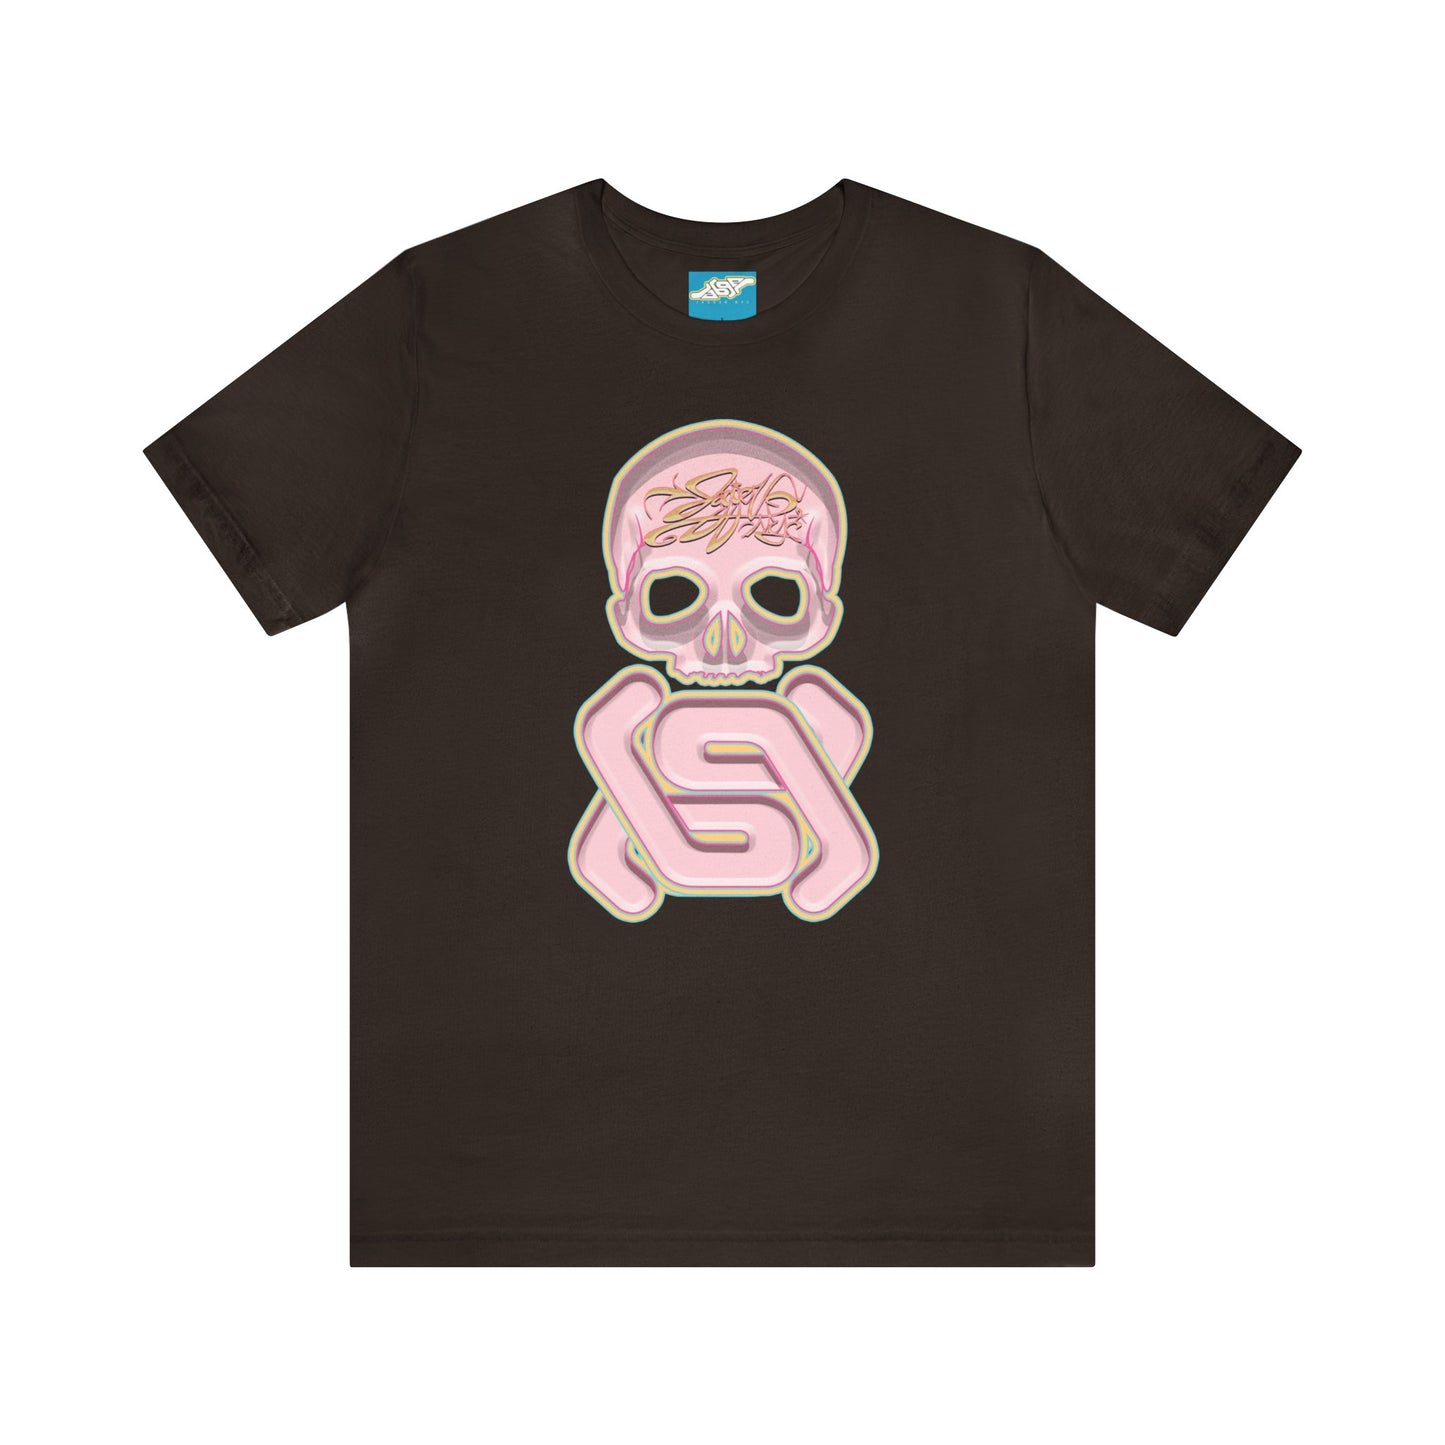 "Bone Digger Refresh - v3" T-shirt